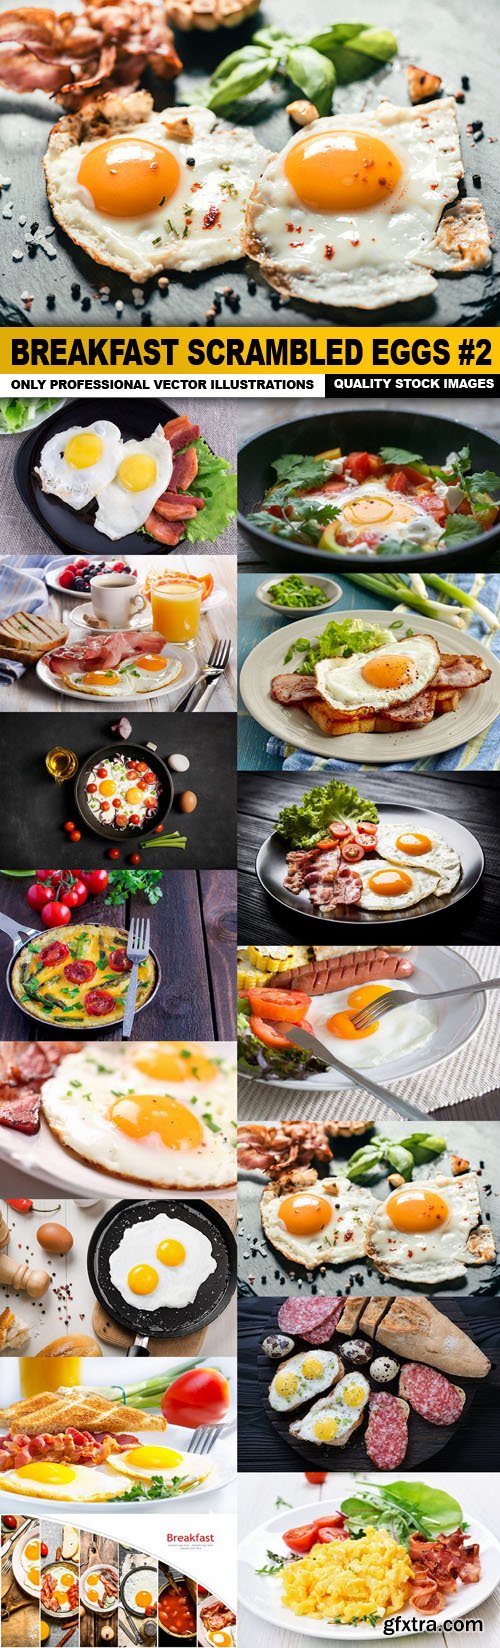 Breakfast Scrambled Eggs #2 - 15 HQ Images